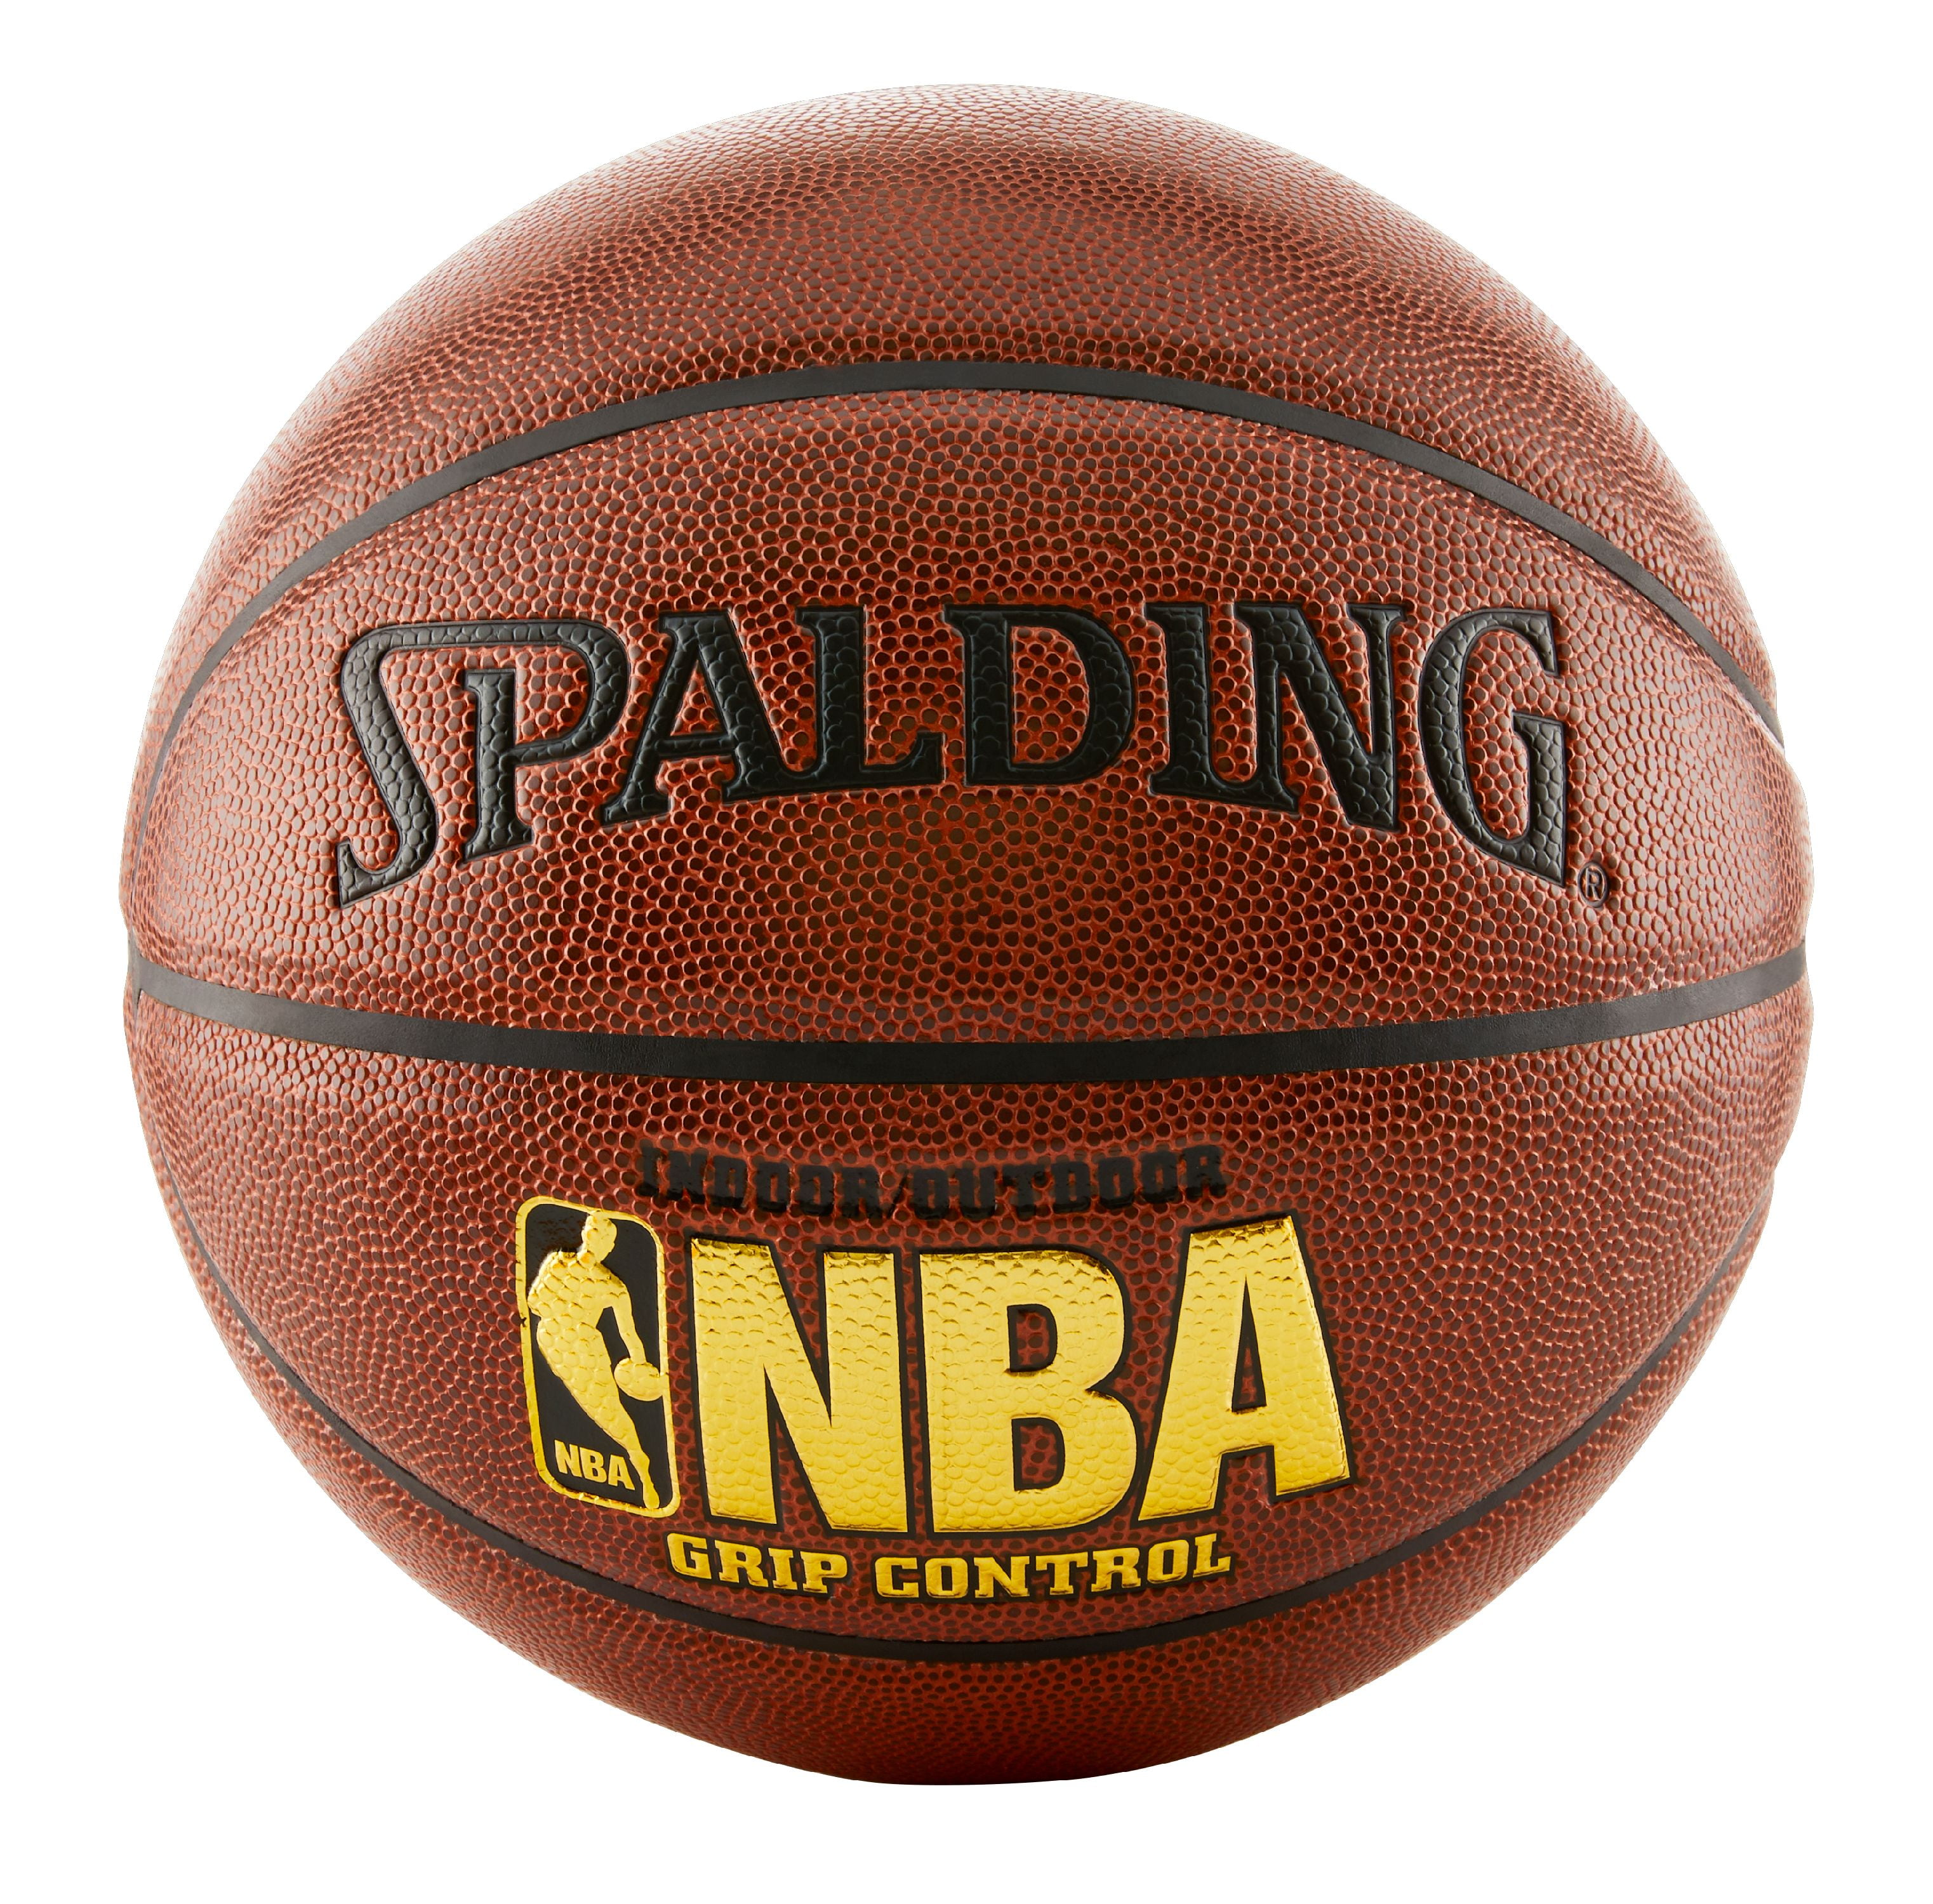 Spalding Nba Gold Basketball Ball Orange 5